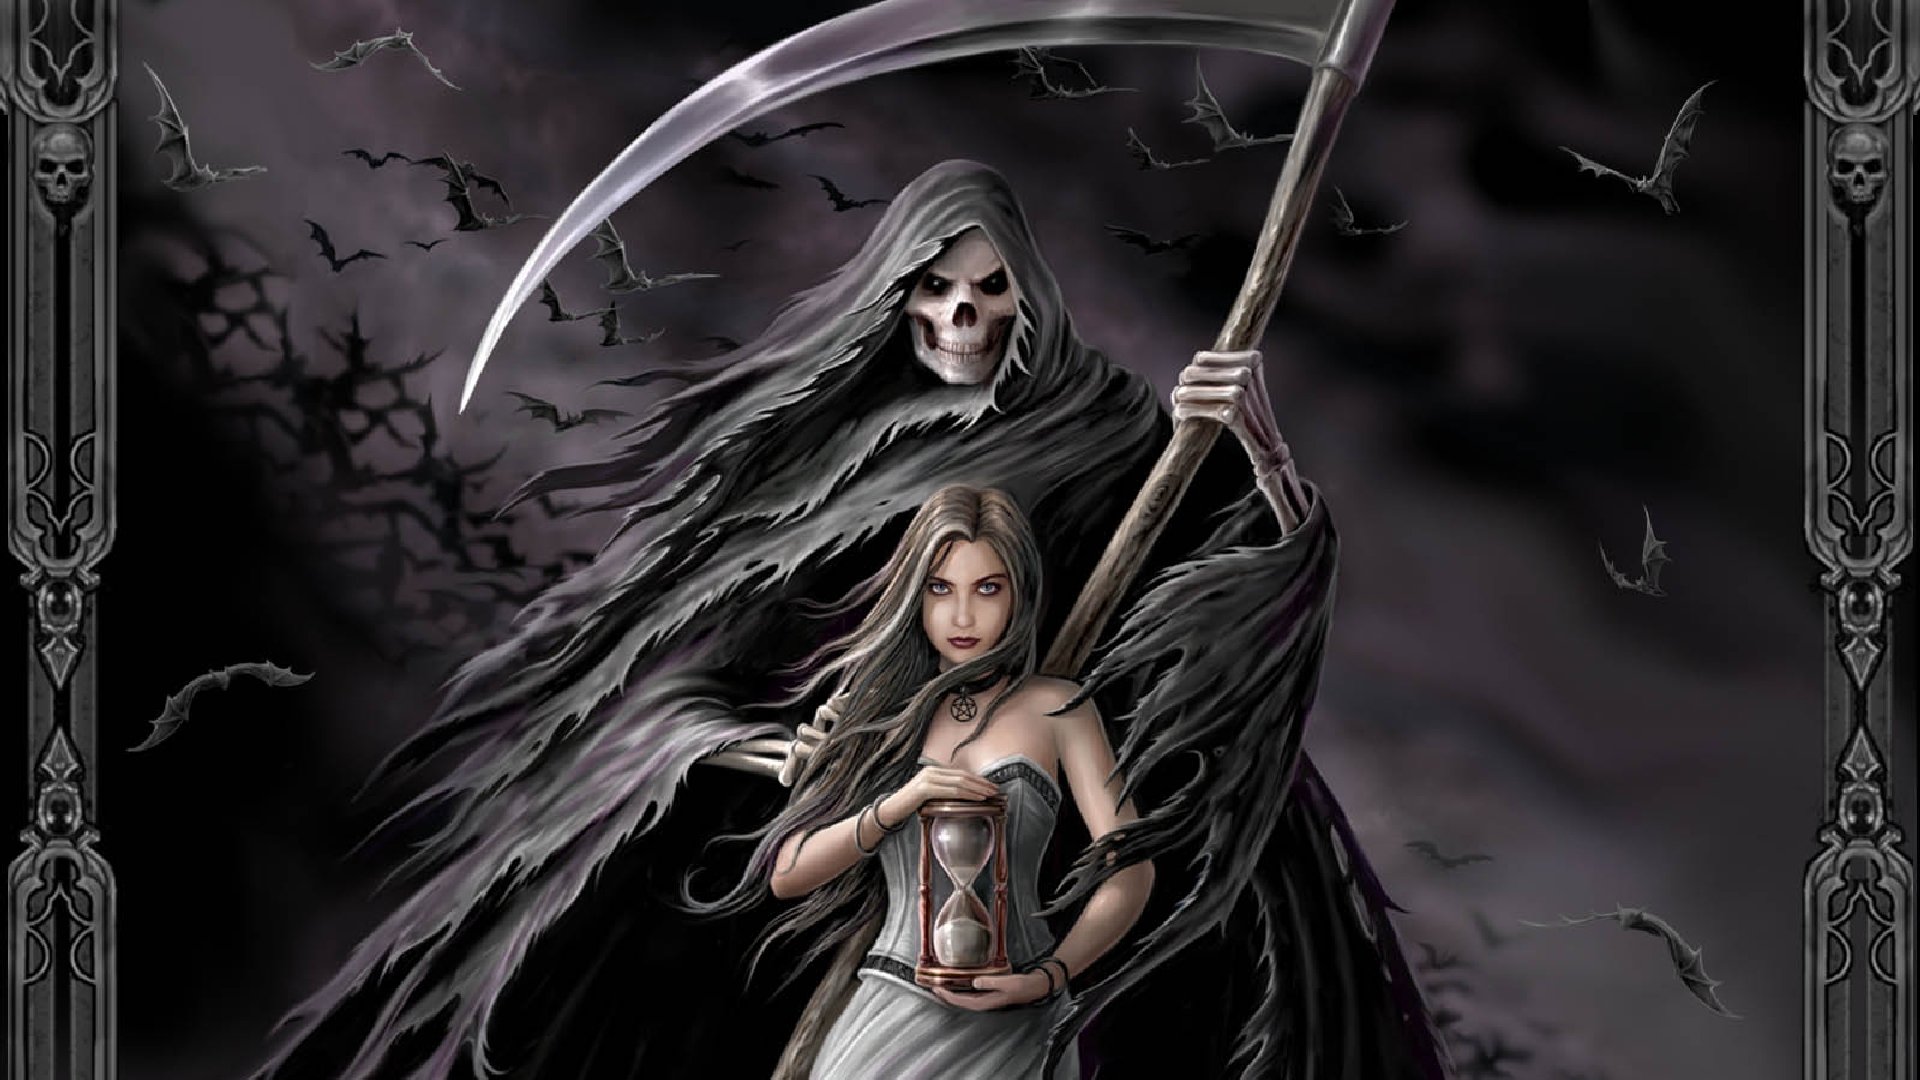 Download 1080p Grim Reaper desktop background ID:155340 for free